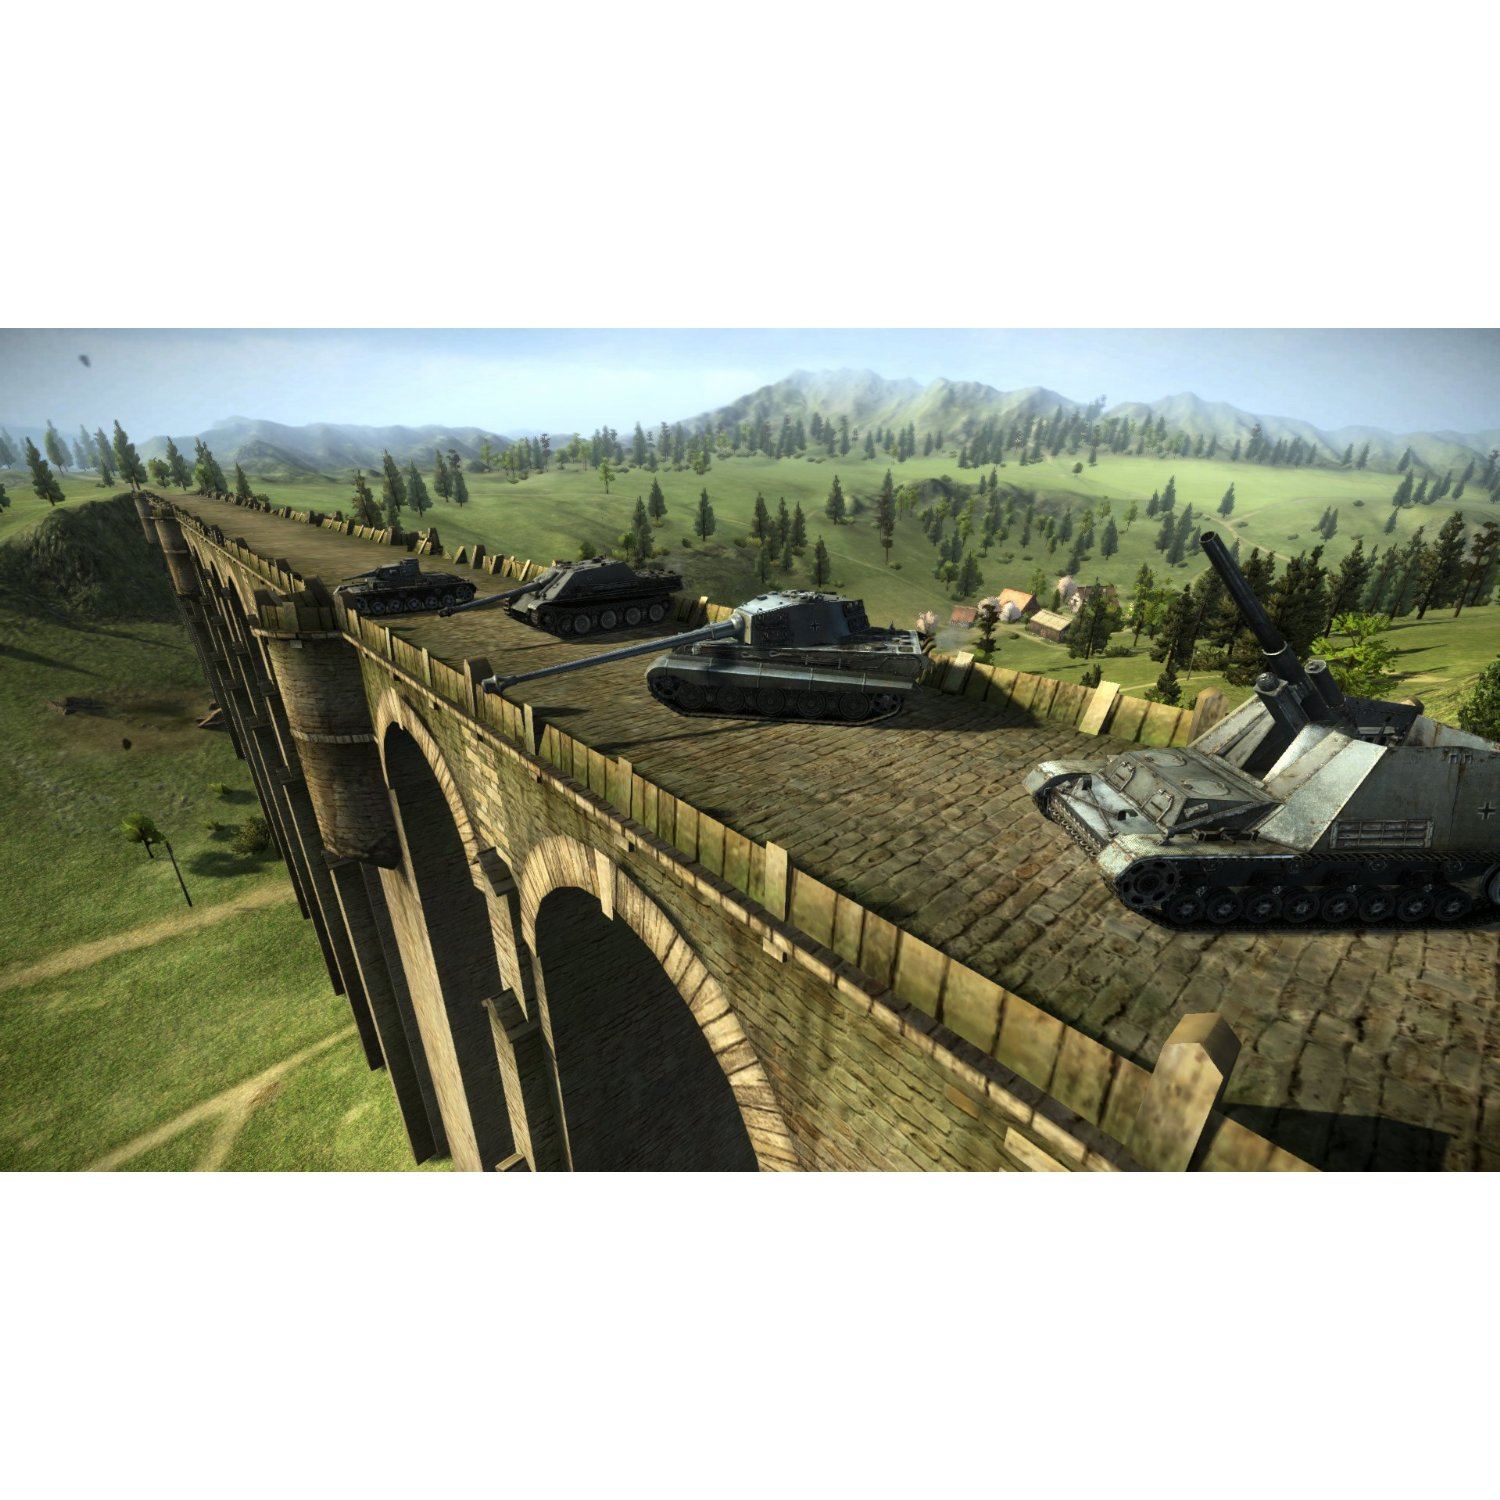 World of Tanks: Xbox 360 Edition コンバット レディ スターター パック-